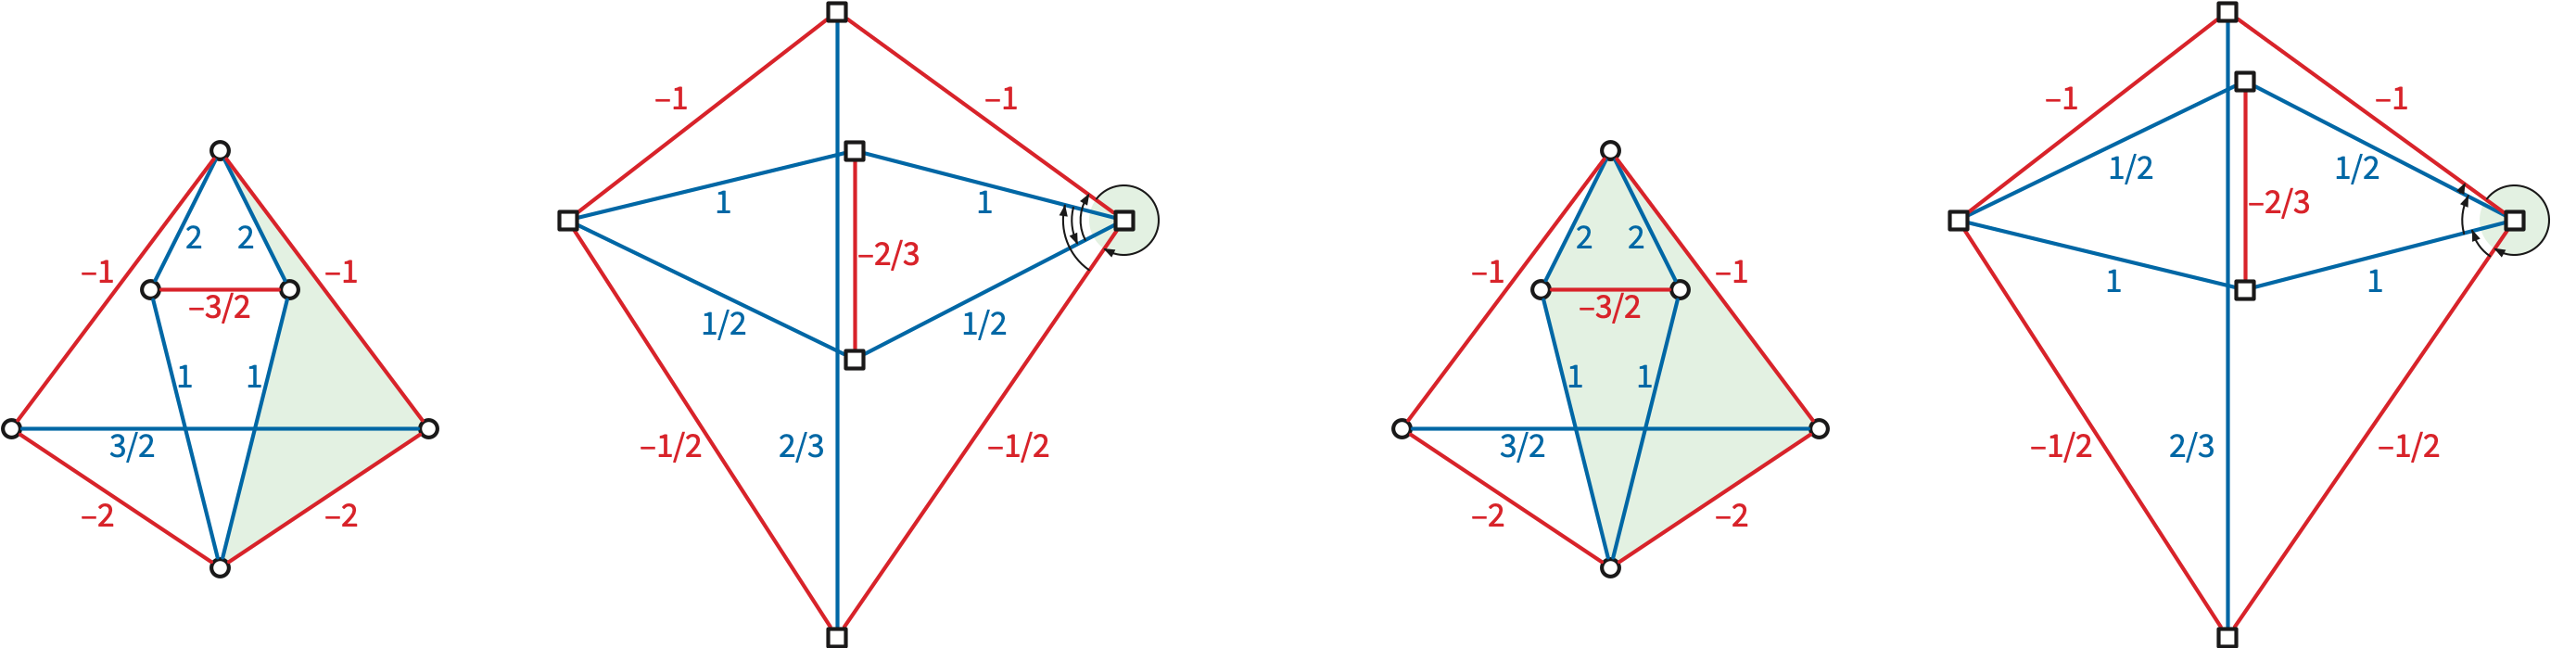 Two reciprocal frameworks for the same planar framework